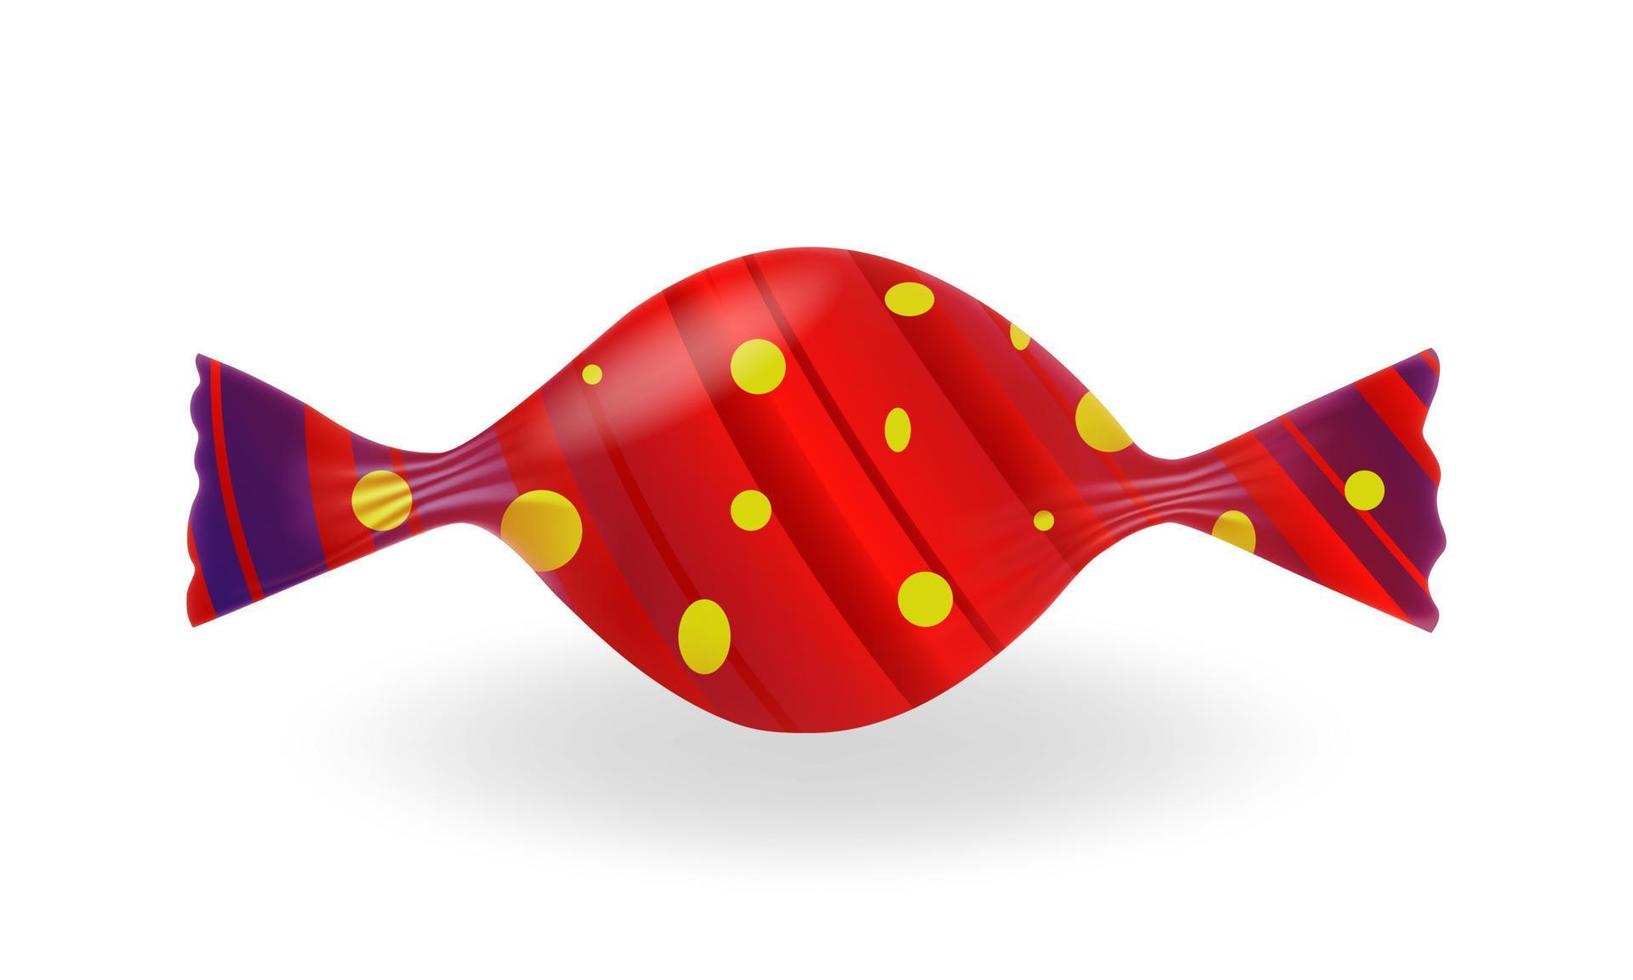 kola godis i en röd omslag på en vit bakgrund. konfektyr sötsaker. vektor illustration.